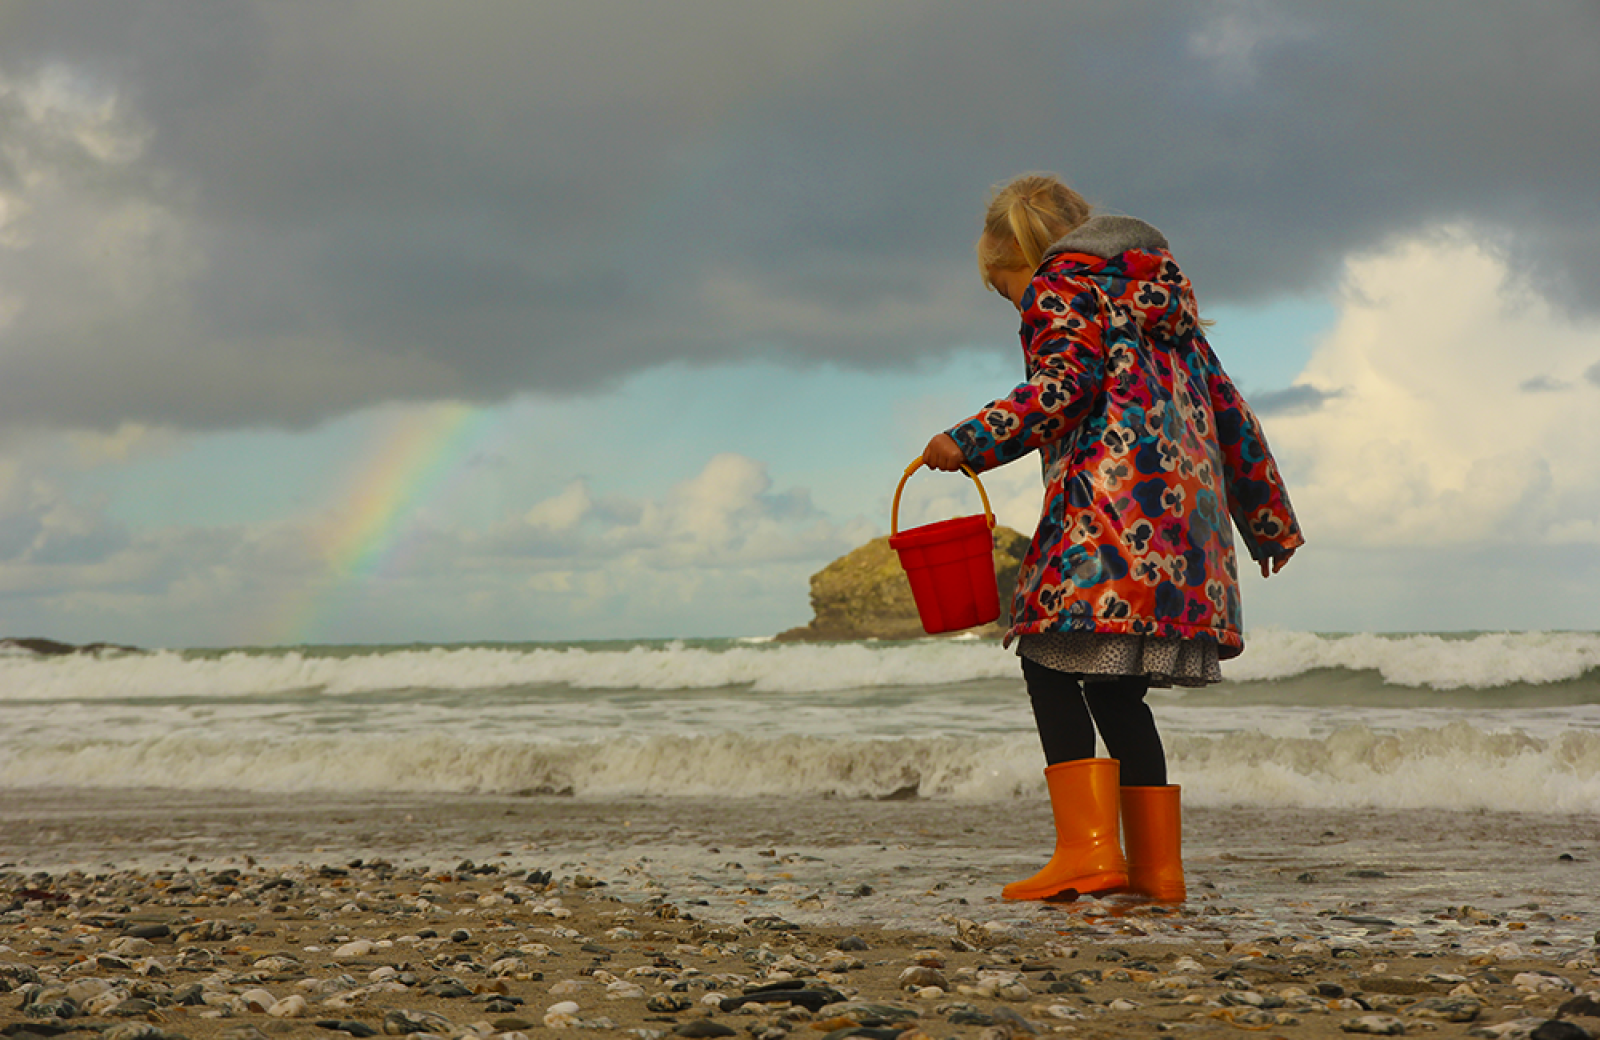 Child on beach with rainbow